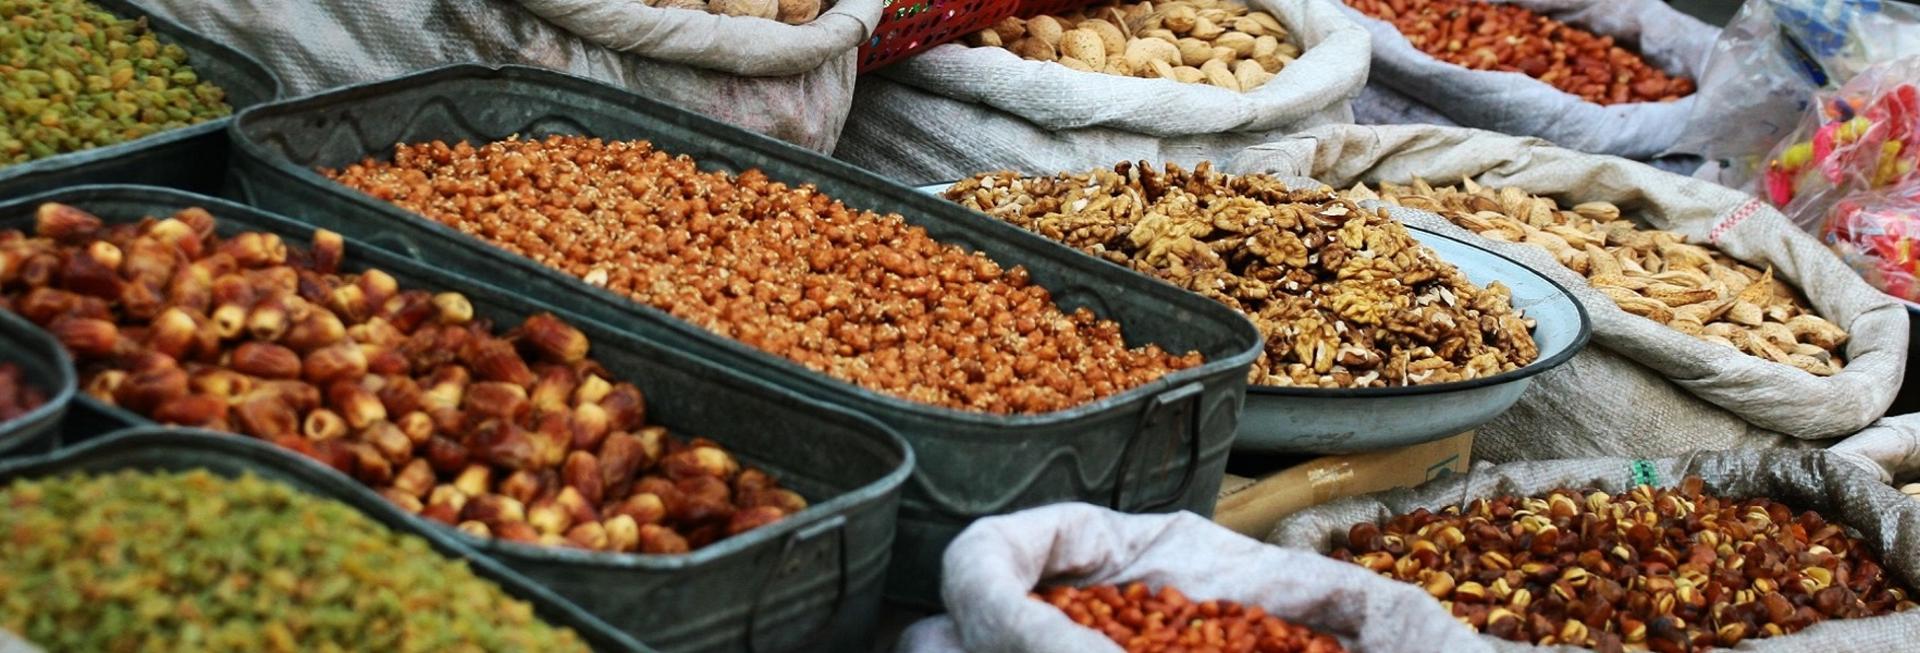 Kashgar Market, Xinjiang